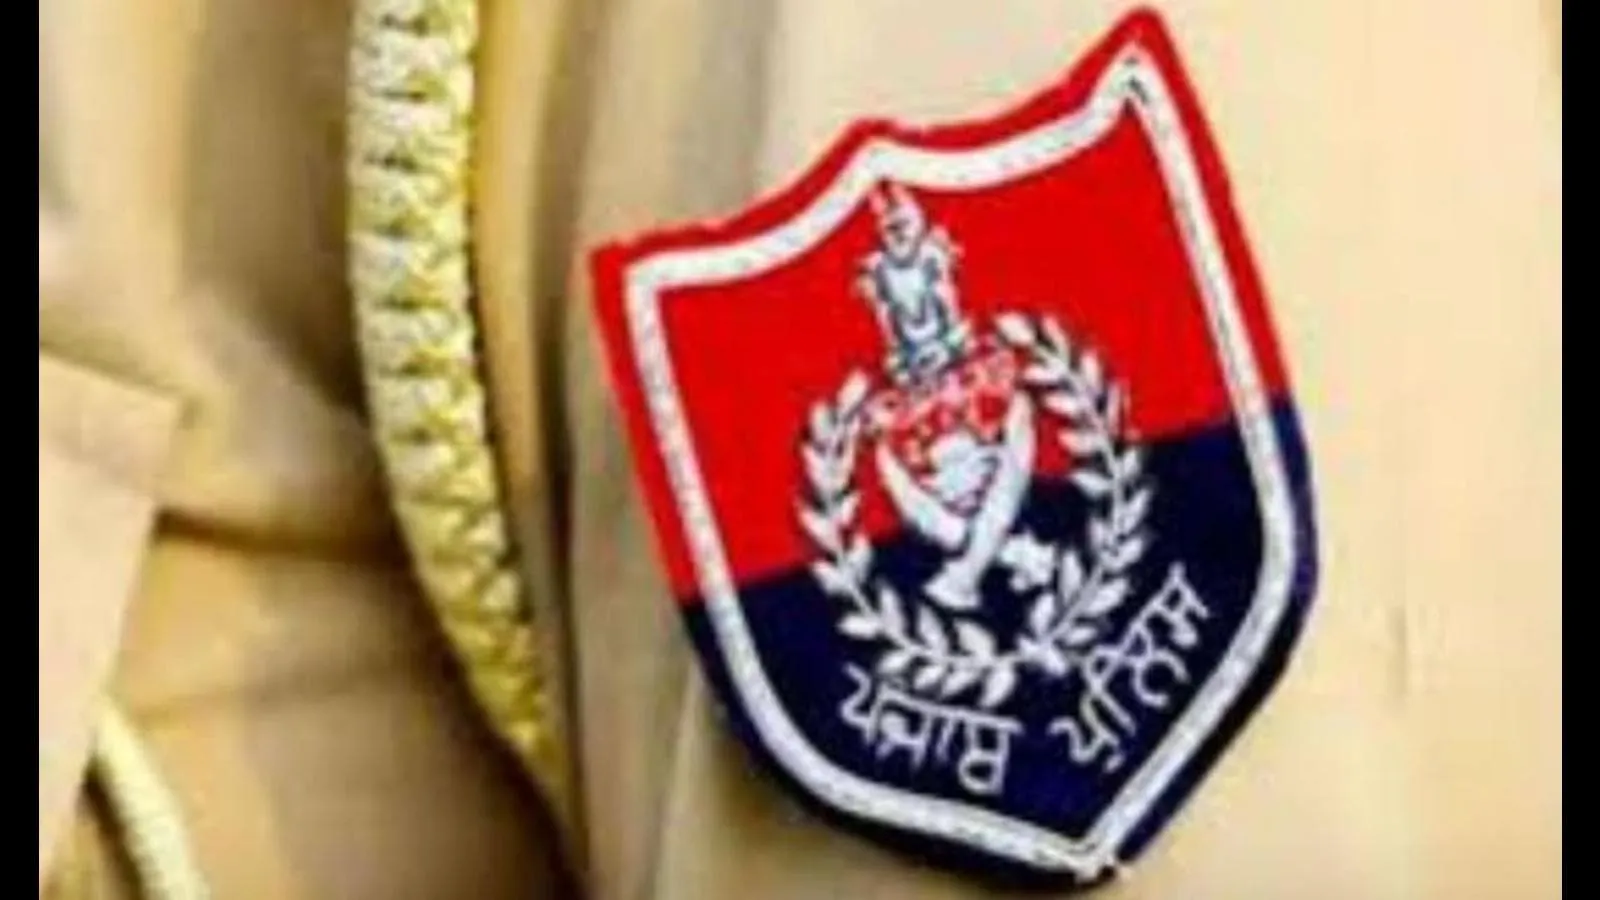 10 police officers transferred in Punjab, Gurdaspur gets new SSP - Hindustan Times